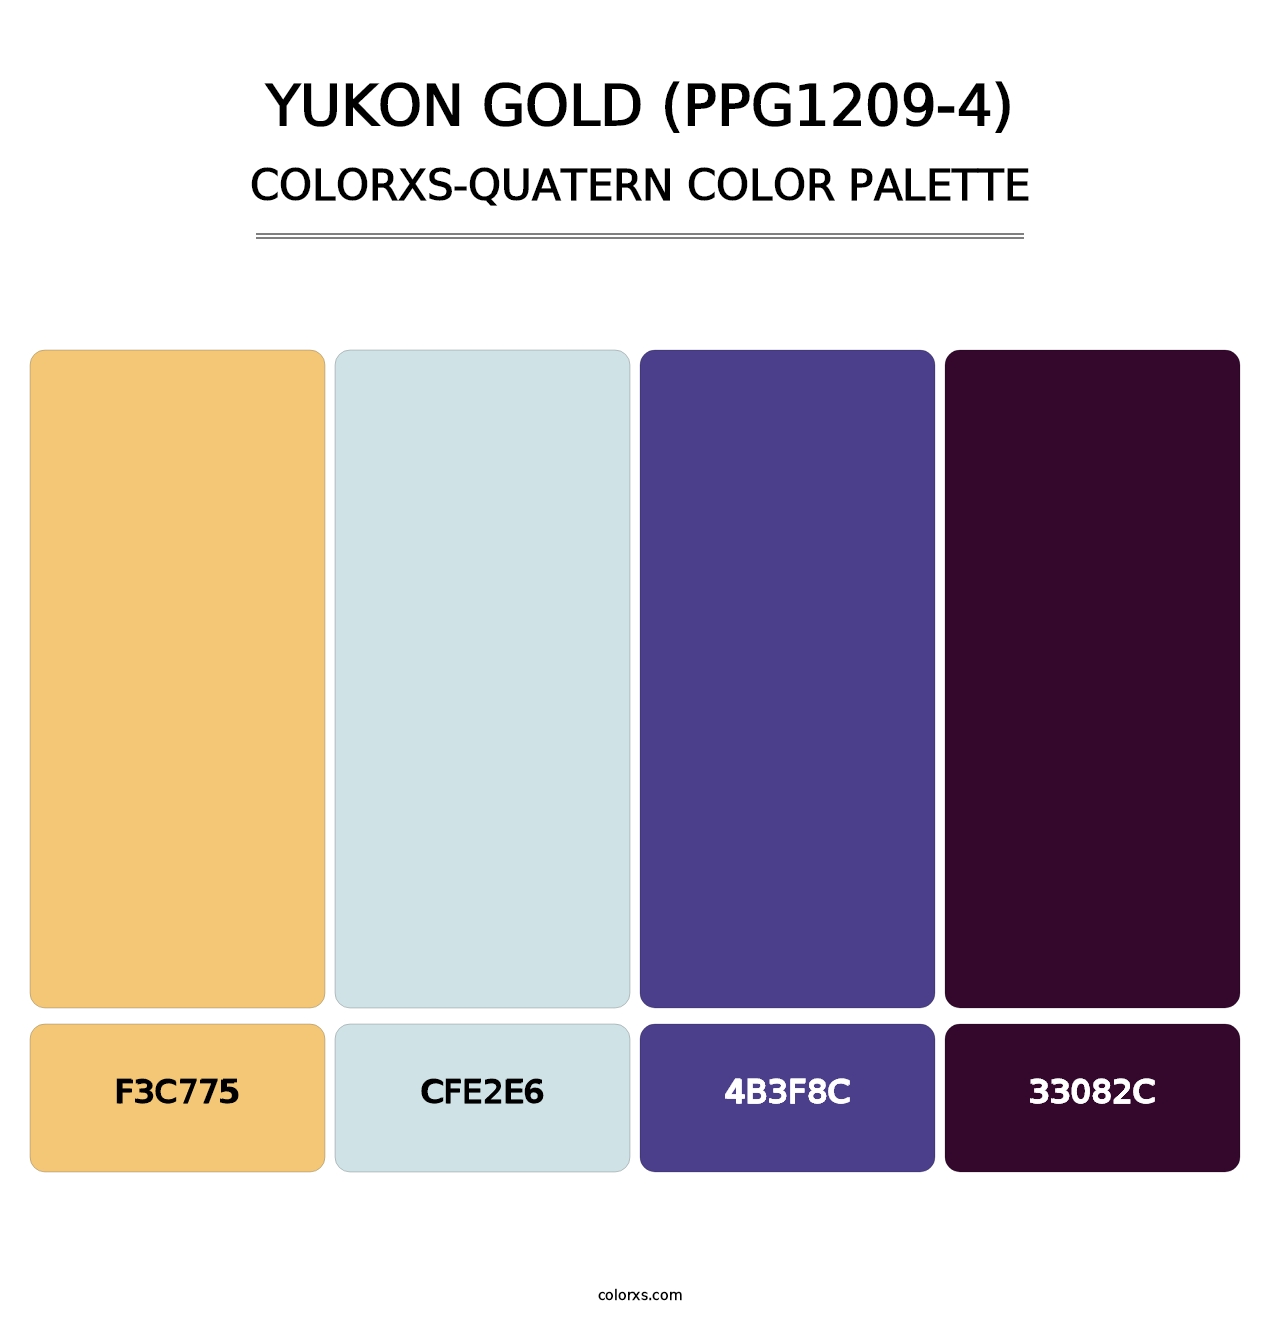 Yukon Gold (PPG1209-4) - Colorxs Quatern Palette